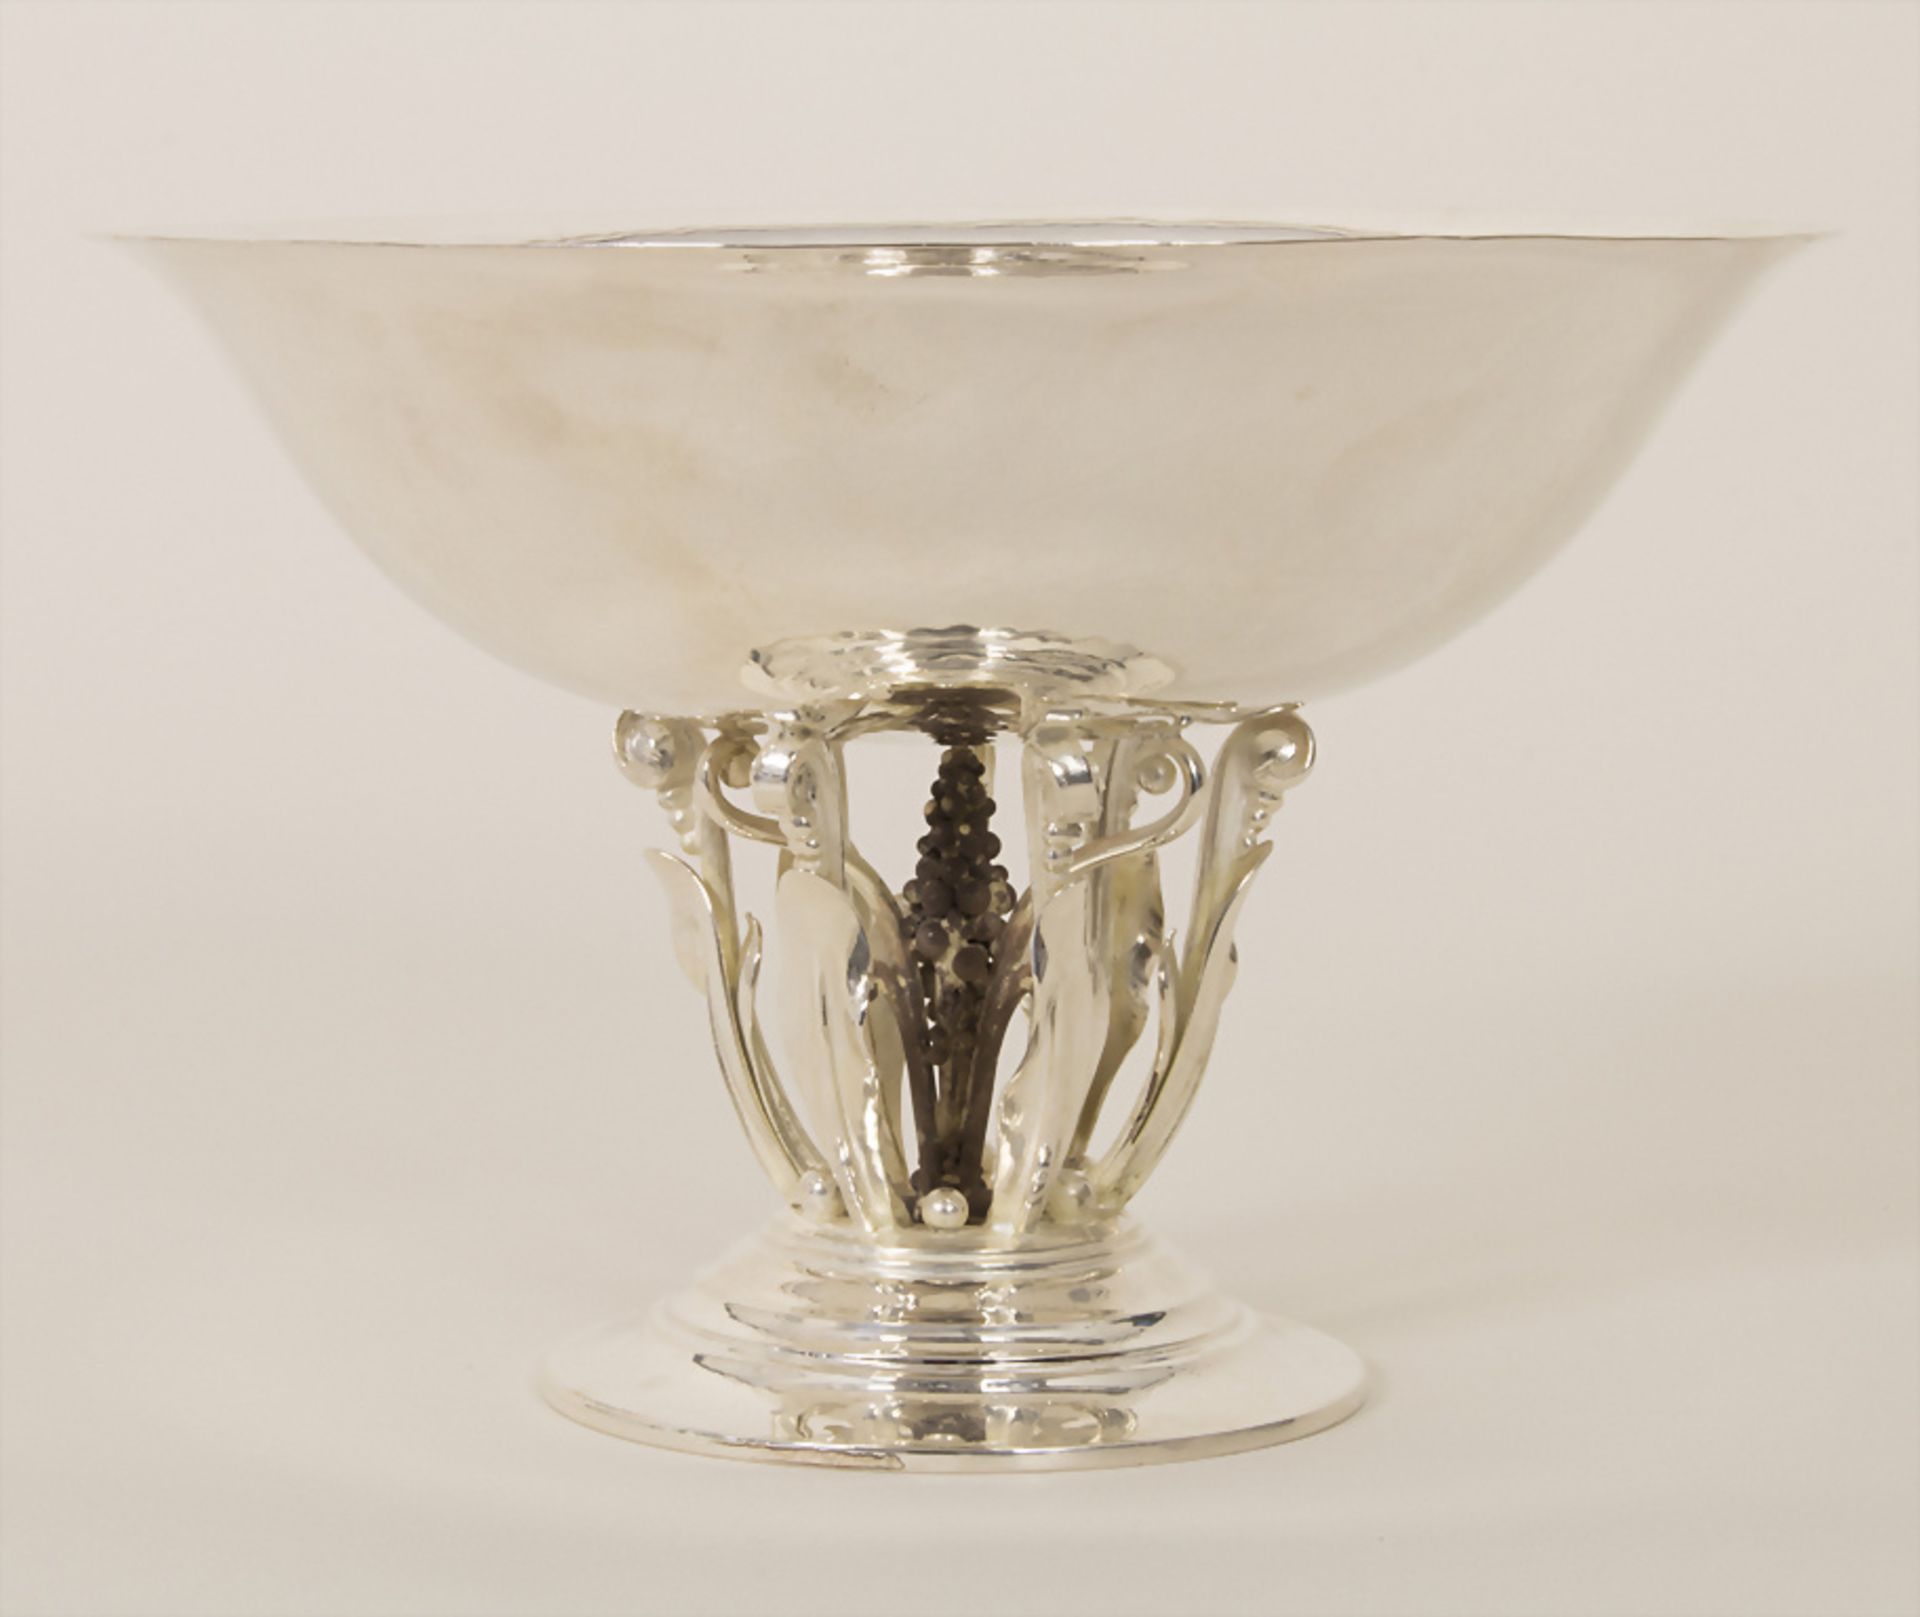 Fußschale mit Beeren / A sterling silver footed bowl with berries', Georg Jensen, Kopenhagen / ...